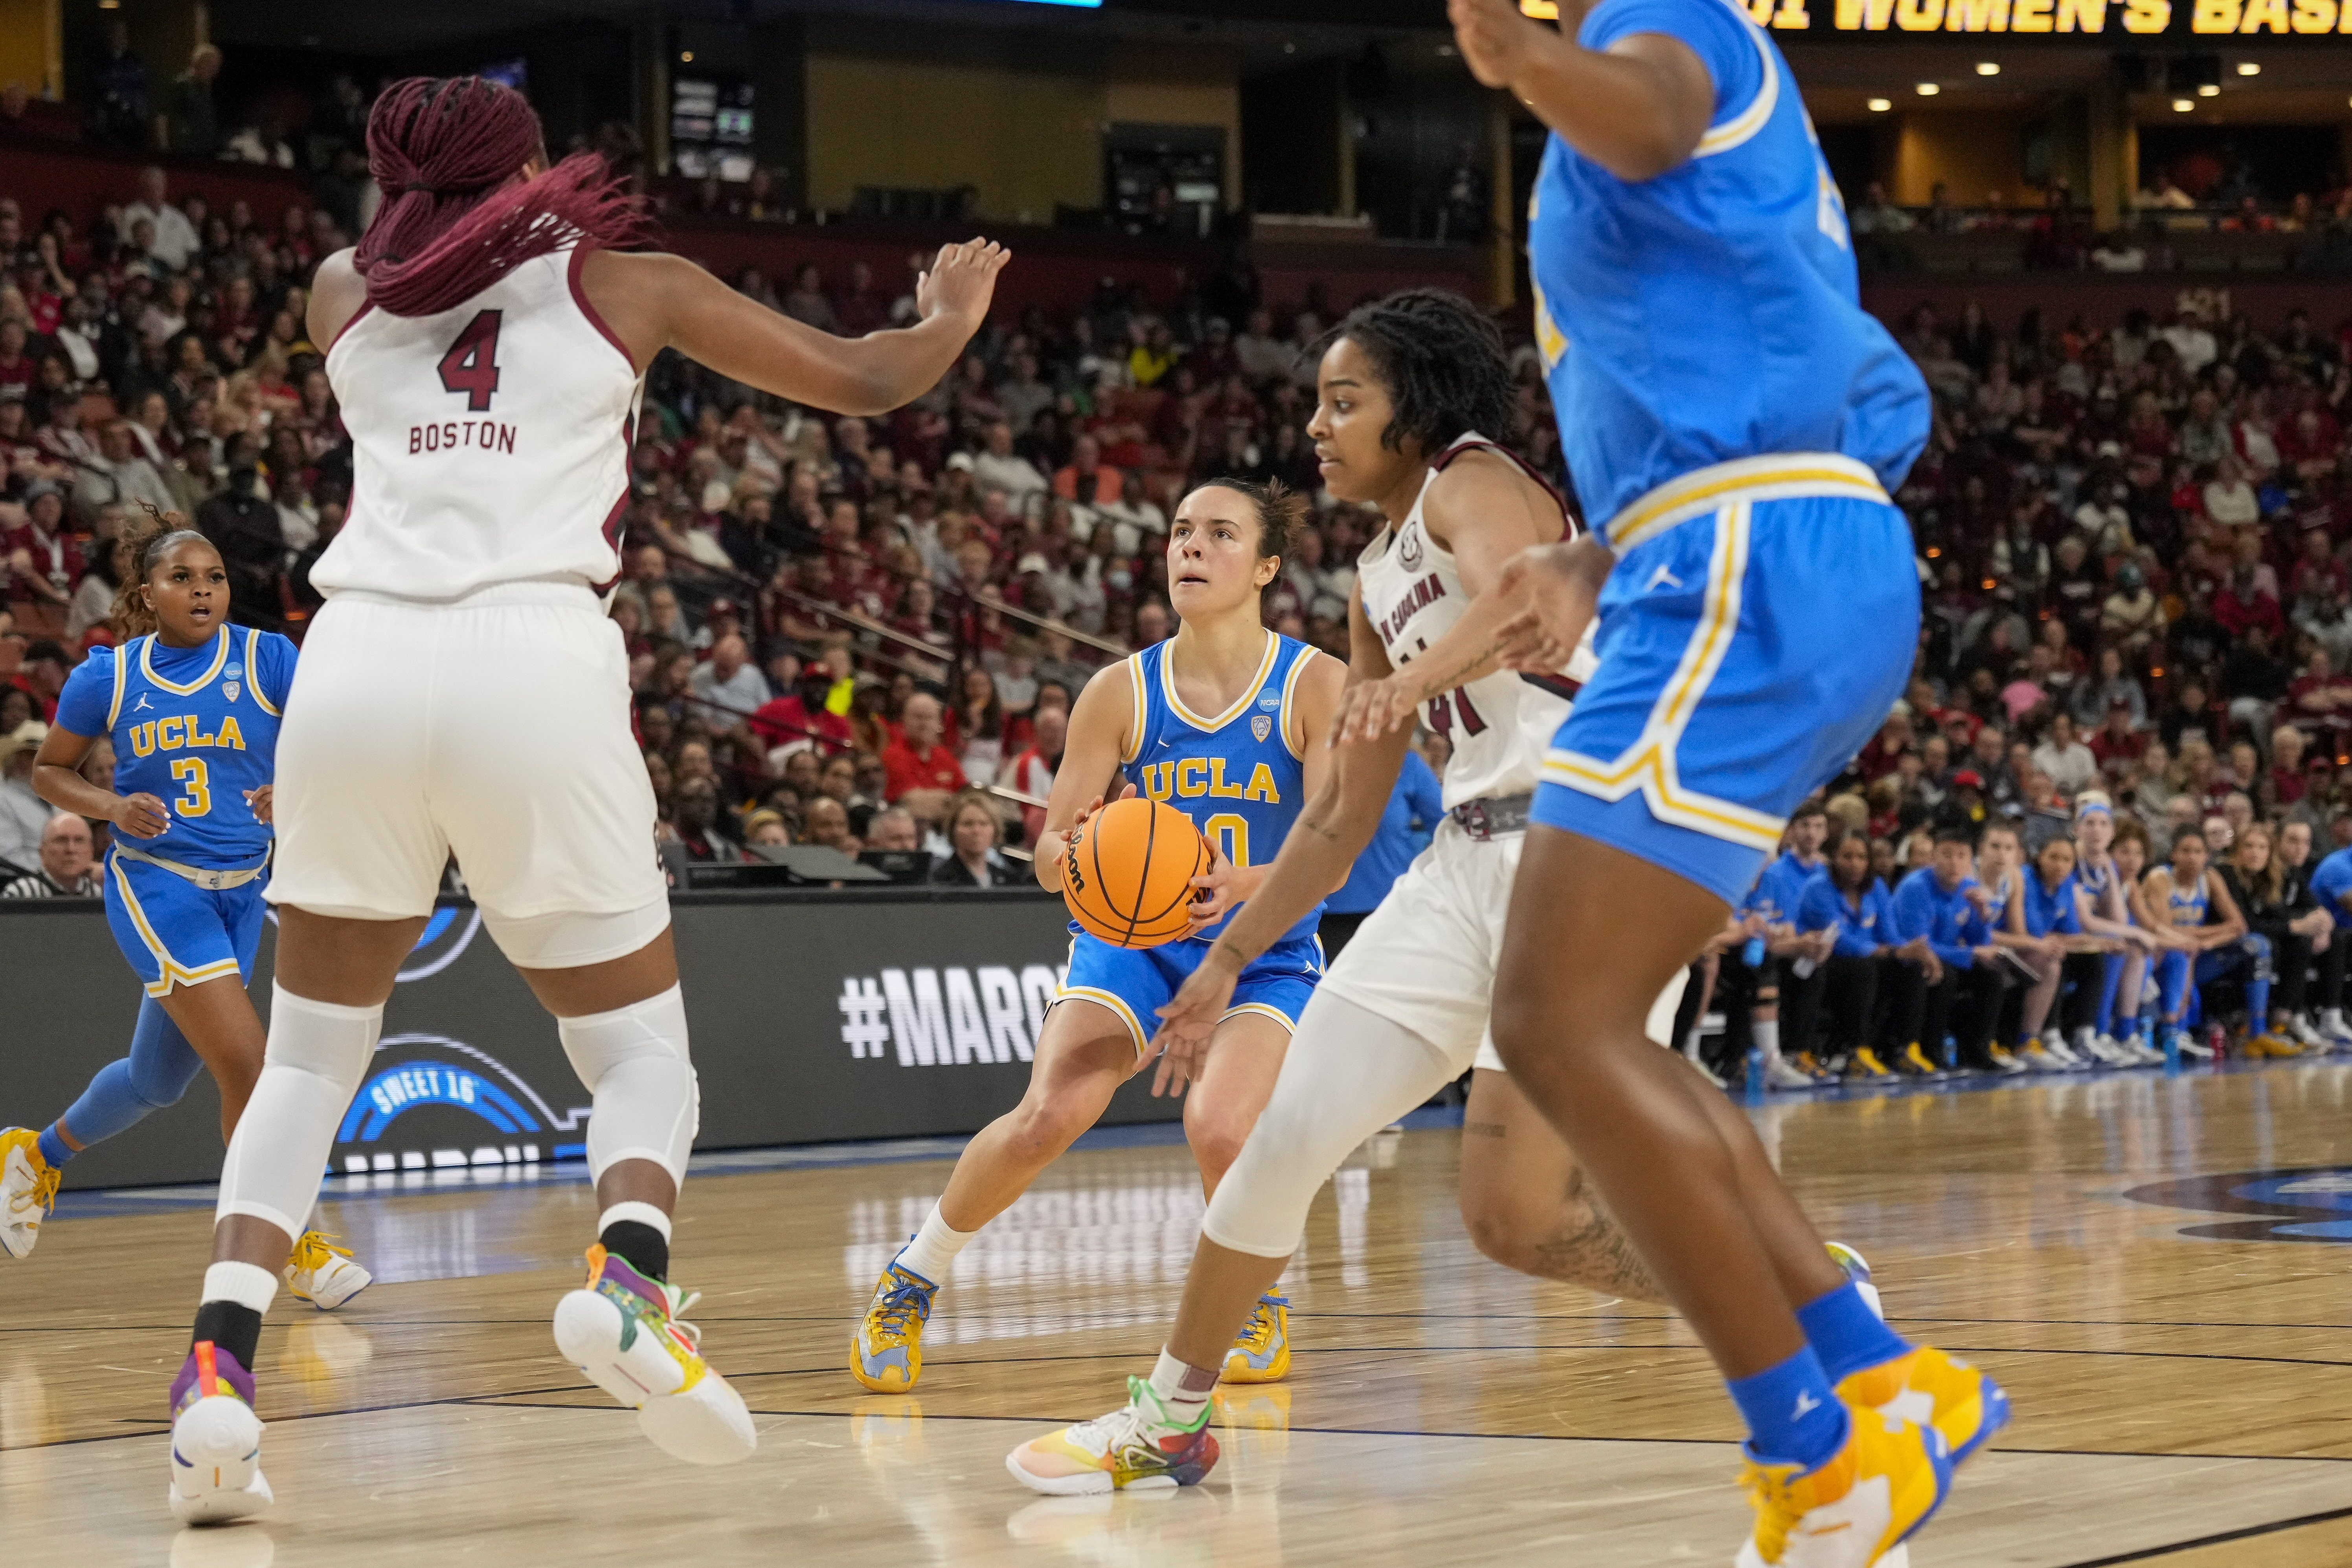 NCAA Womens Basketball: Greenville Regional Semifinals - South Carolina vs UCLA